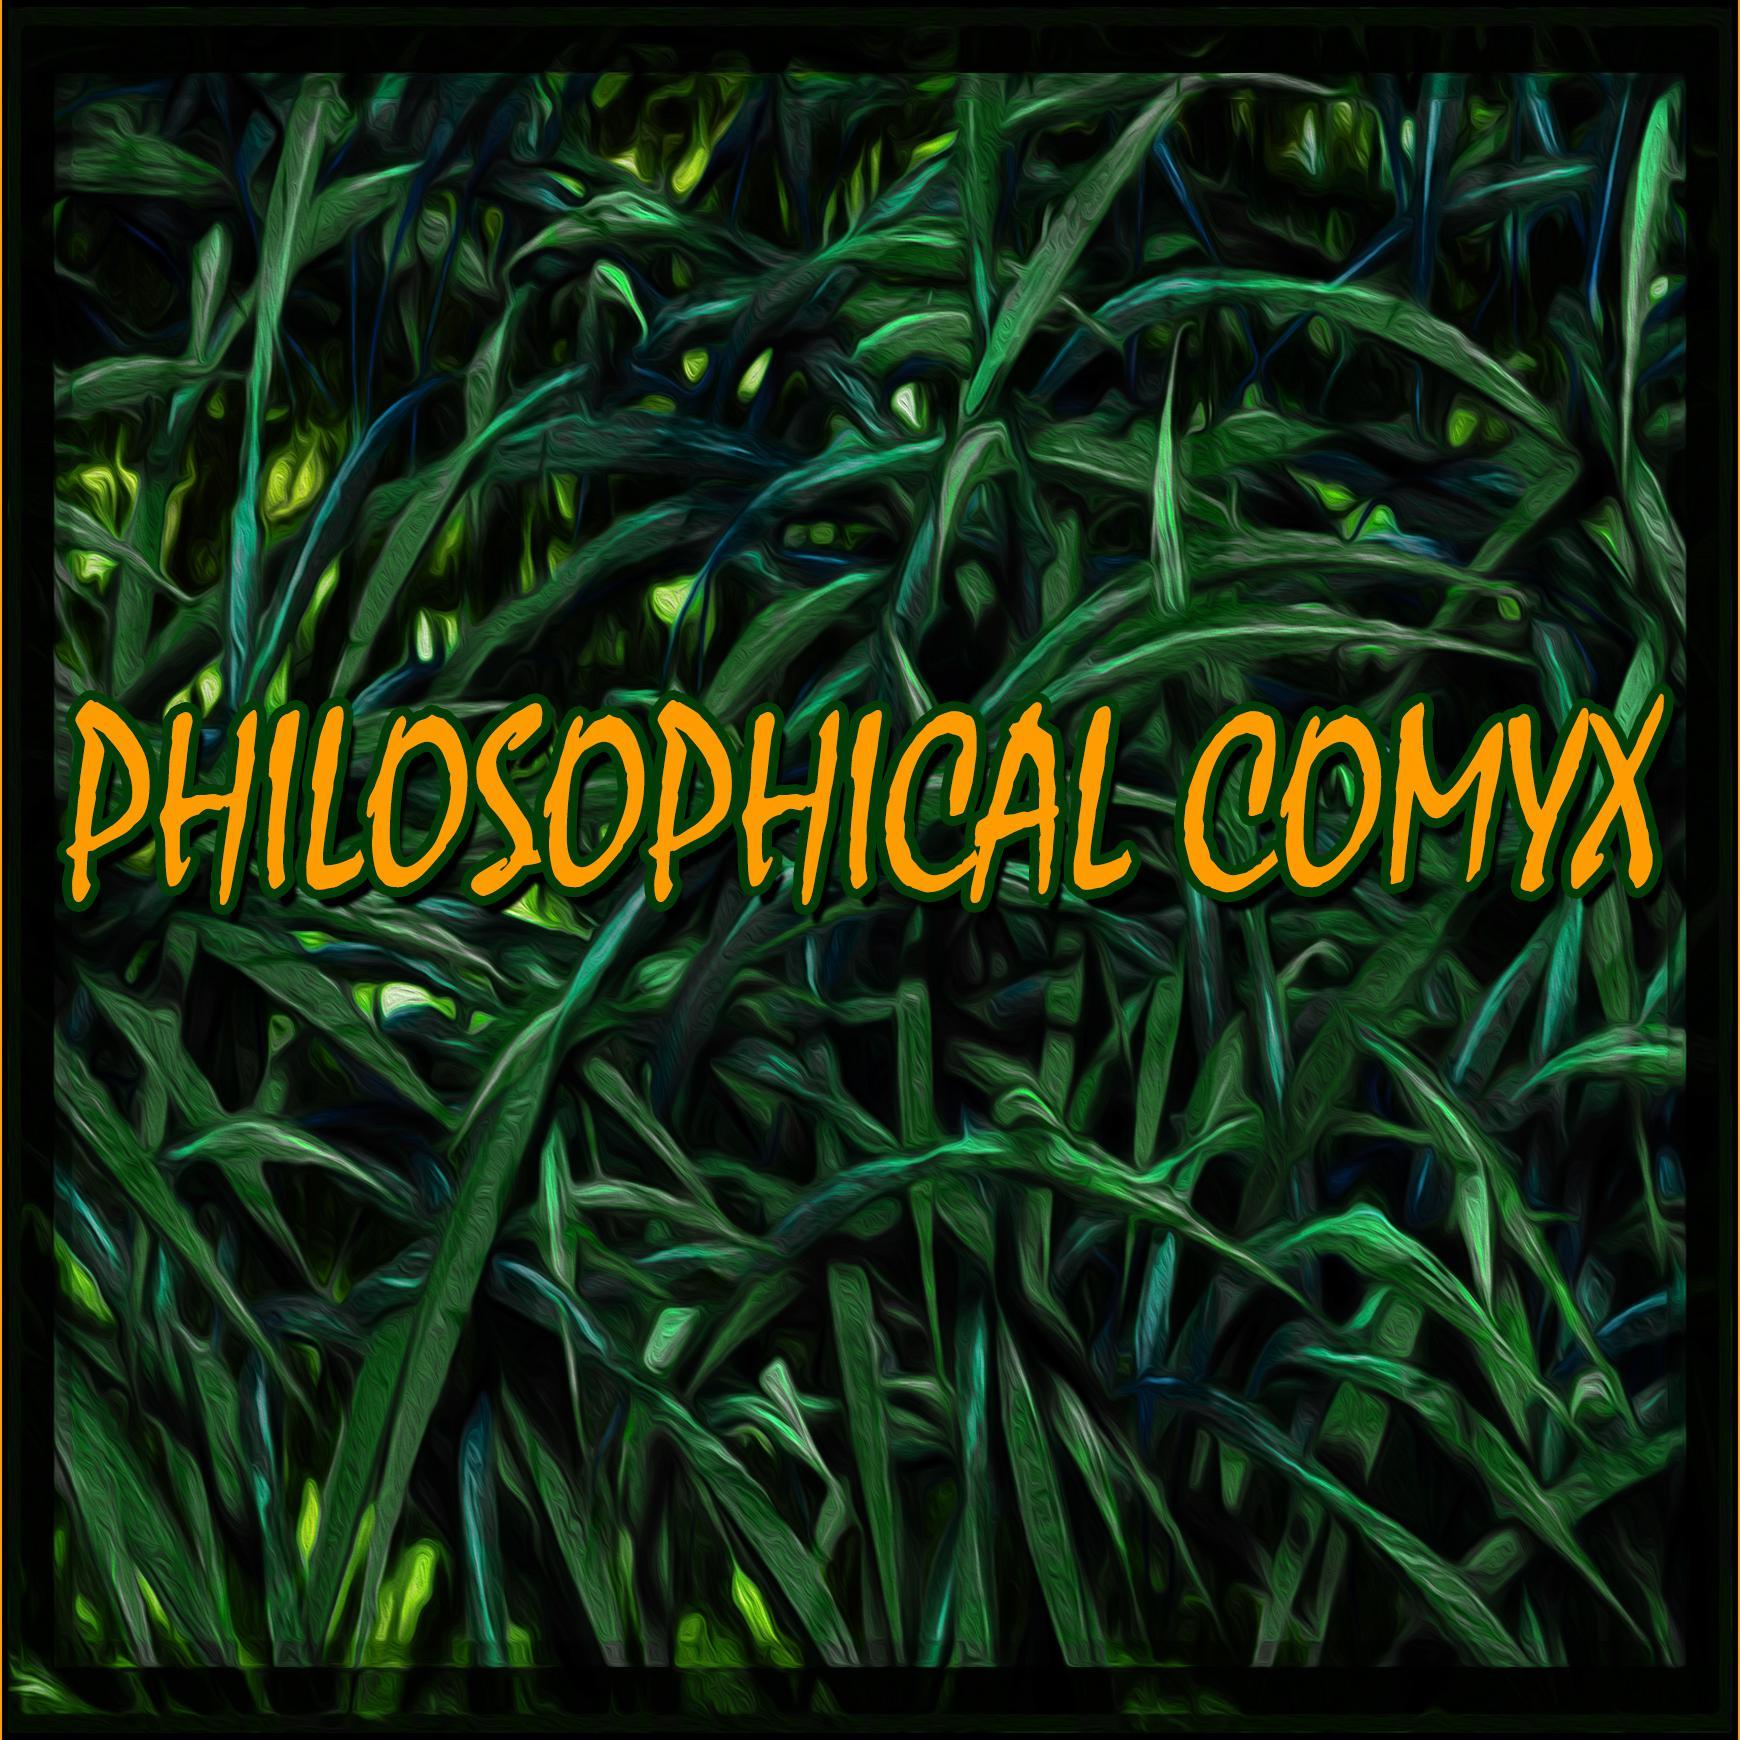 Welcome to the Philosophical Comyx, comic book based on philosophical works.  

Καλωσήλθατε στο Φιλοσοφικό Κόμυξ, βιβλίο κόμικ βασισμένο σε φιλοσοφικά έργα.